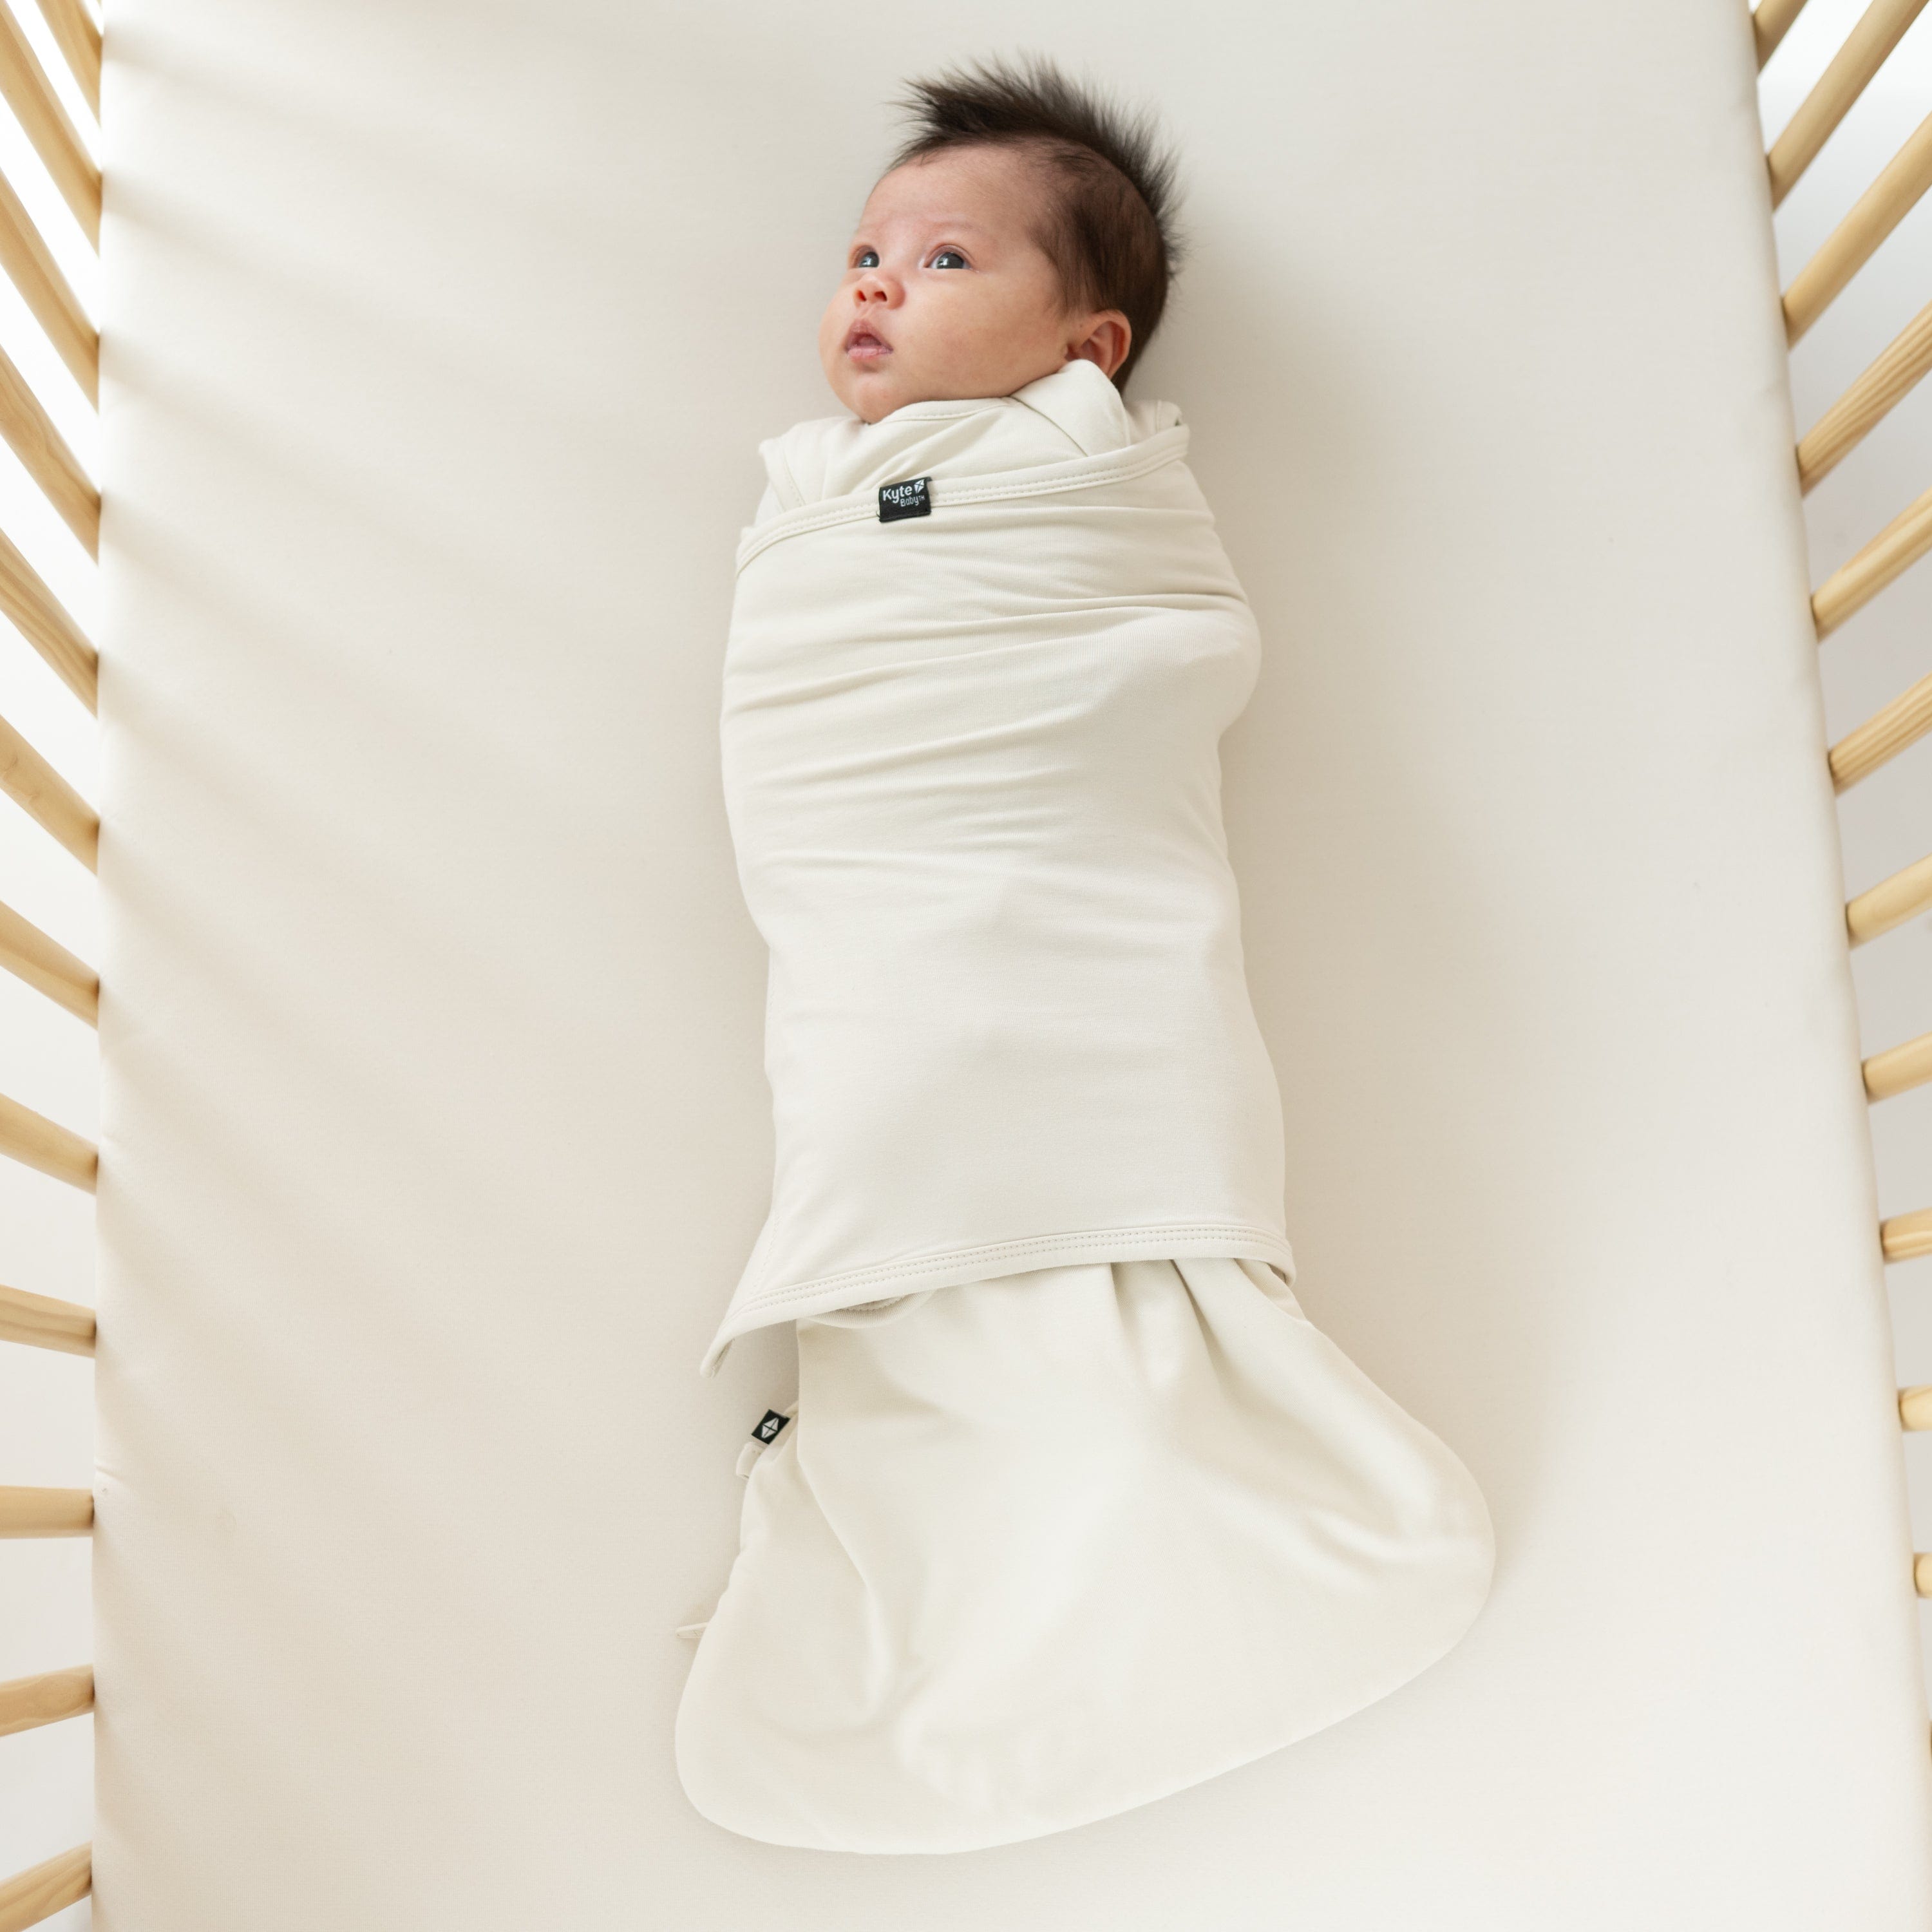 Newborn wearing Kyte Baby Sleep Bag Swaddler in Ecru with elastic band